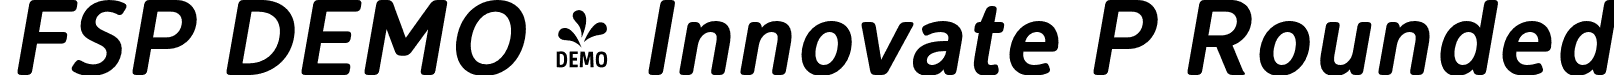 FSP DEMO - Innovate P Rounded font | Fontspring-DEMO-innovateprounded-bold_oblique.otf